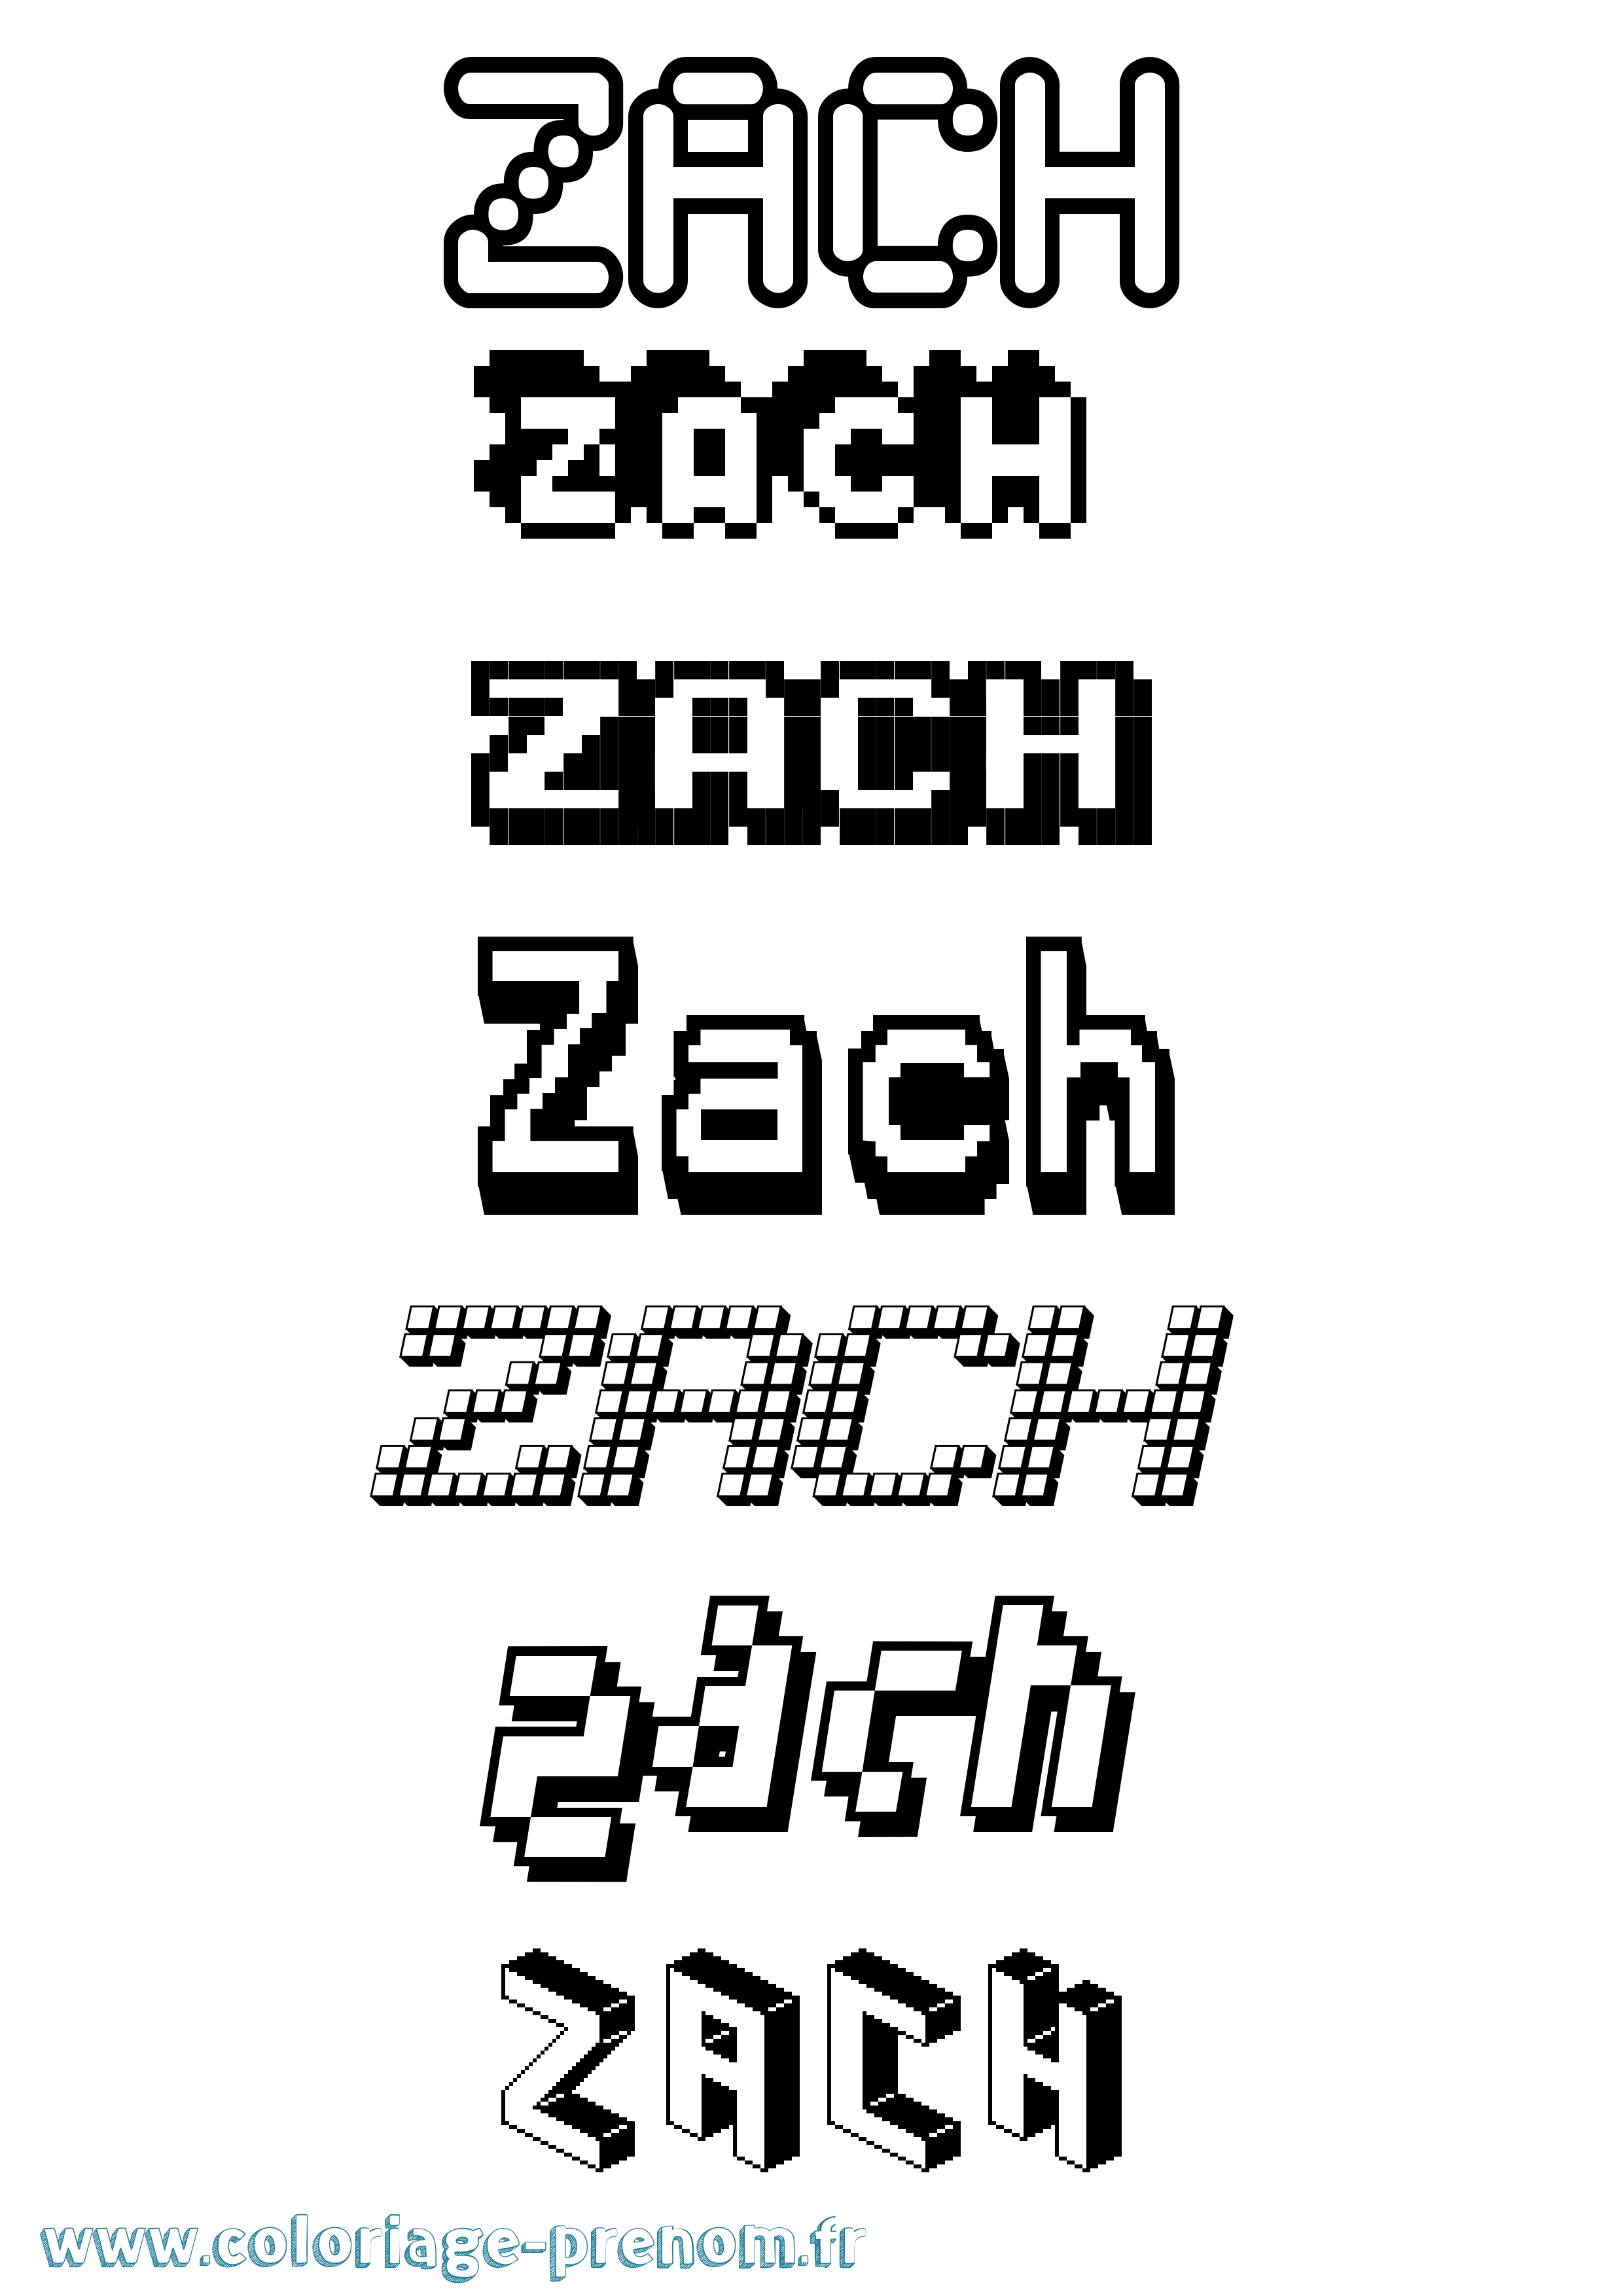 Coloriage prénom Zach Pixel